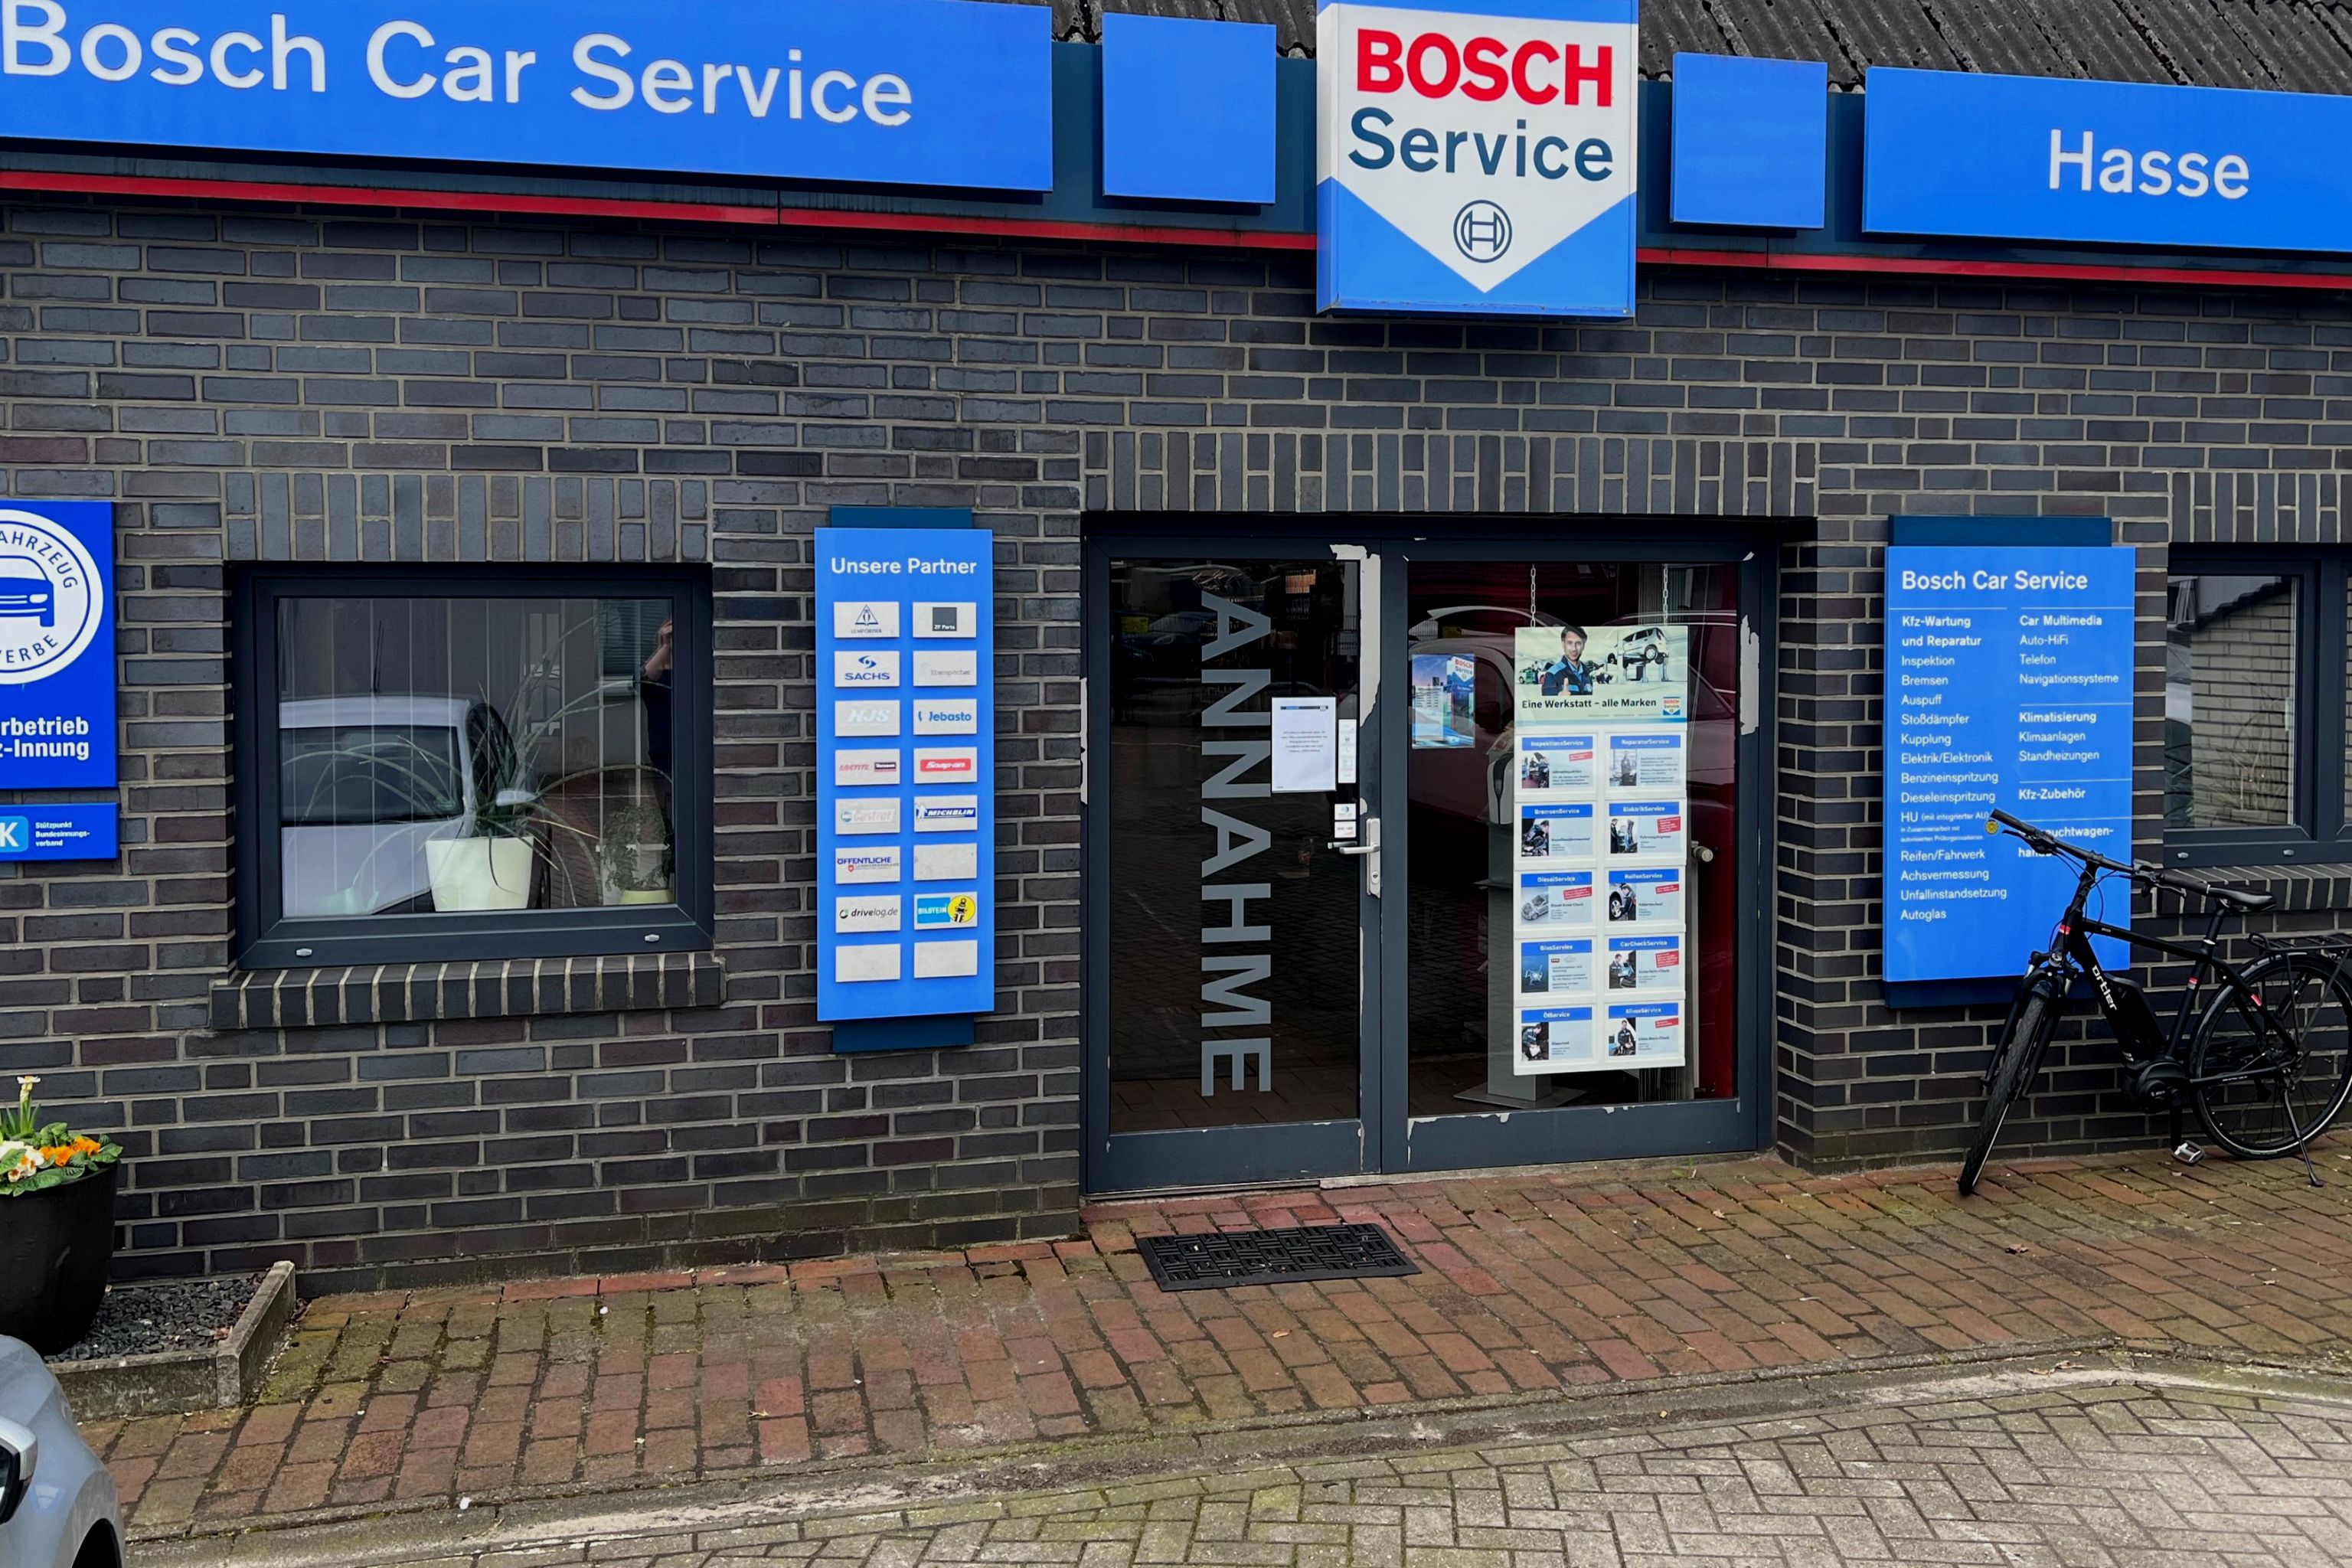 Bosch Car Service Hasse